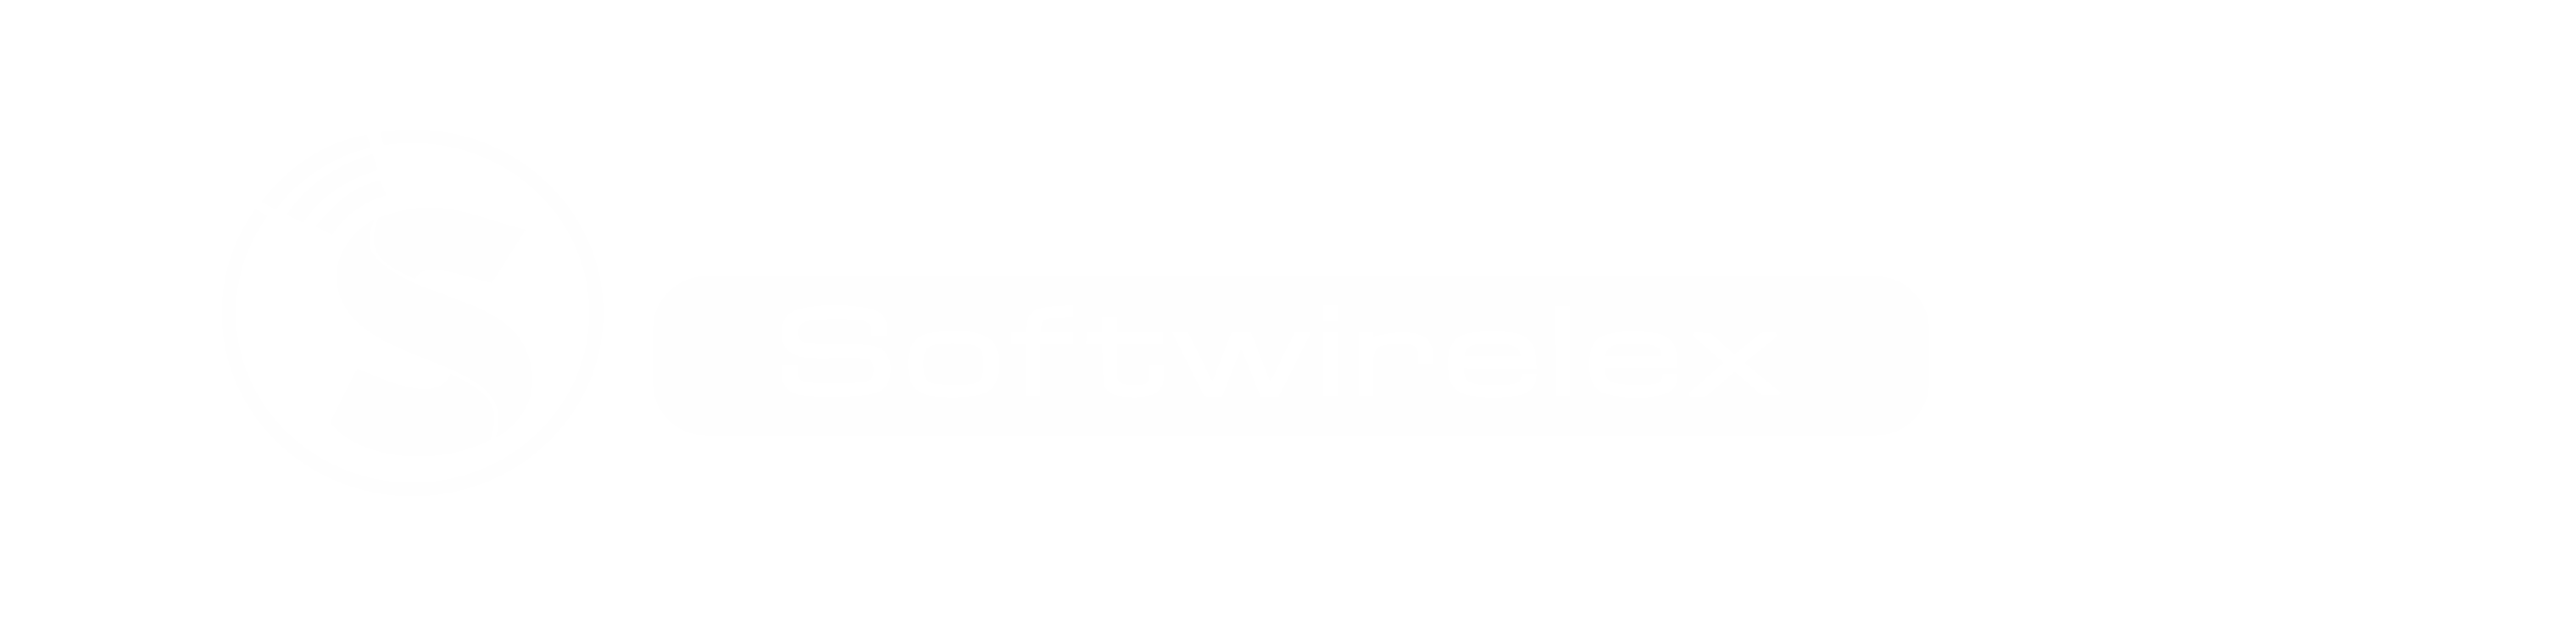 softwirelex